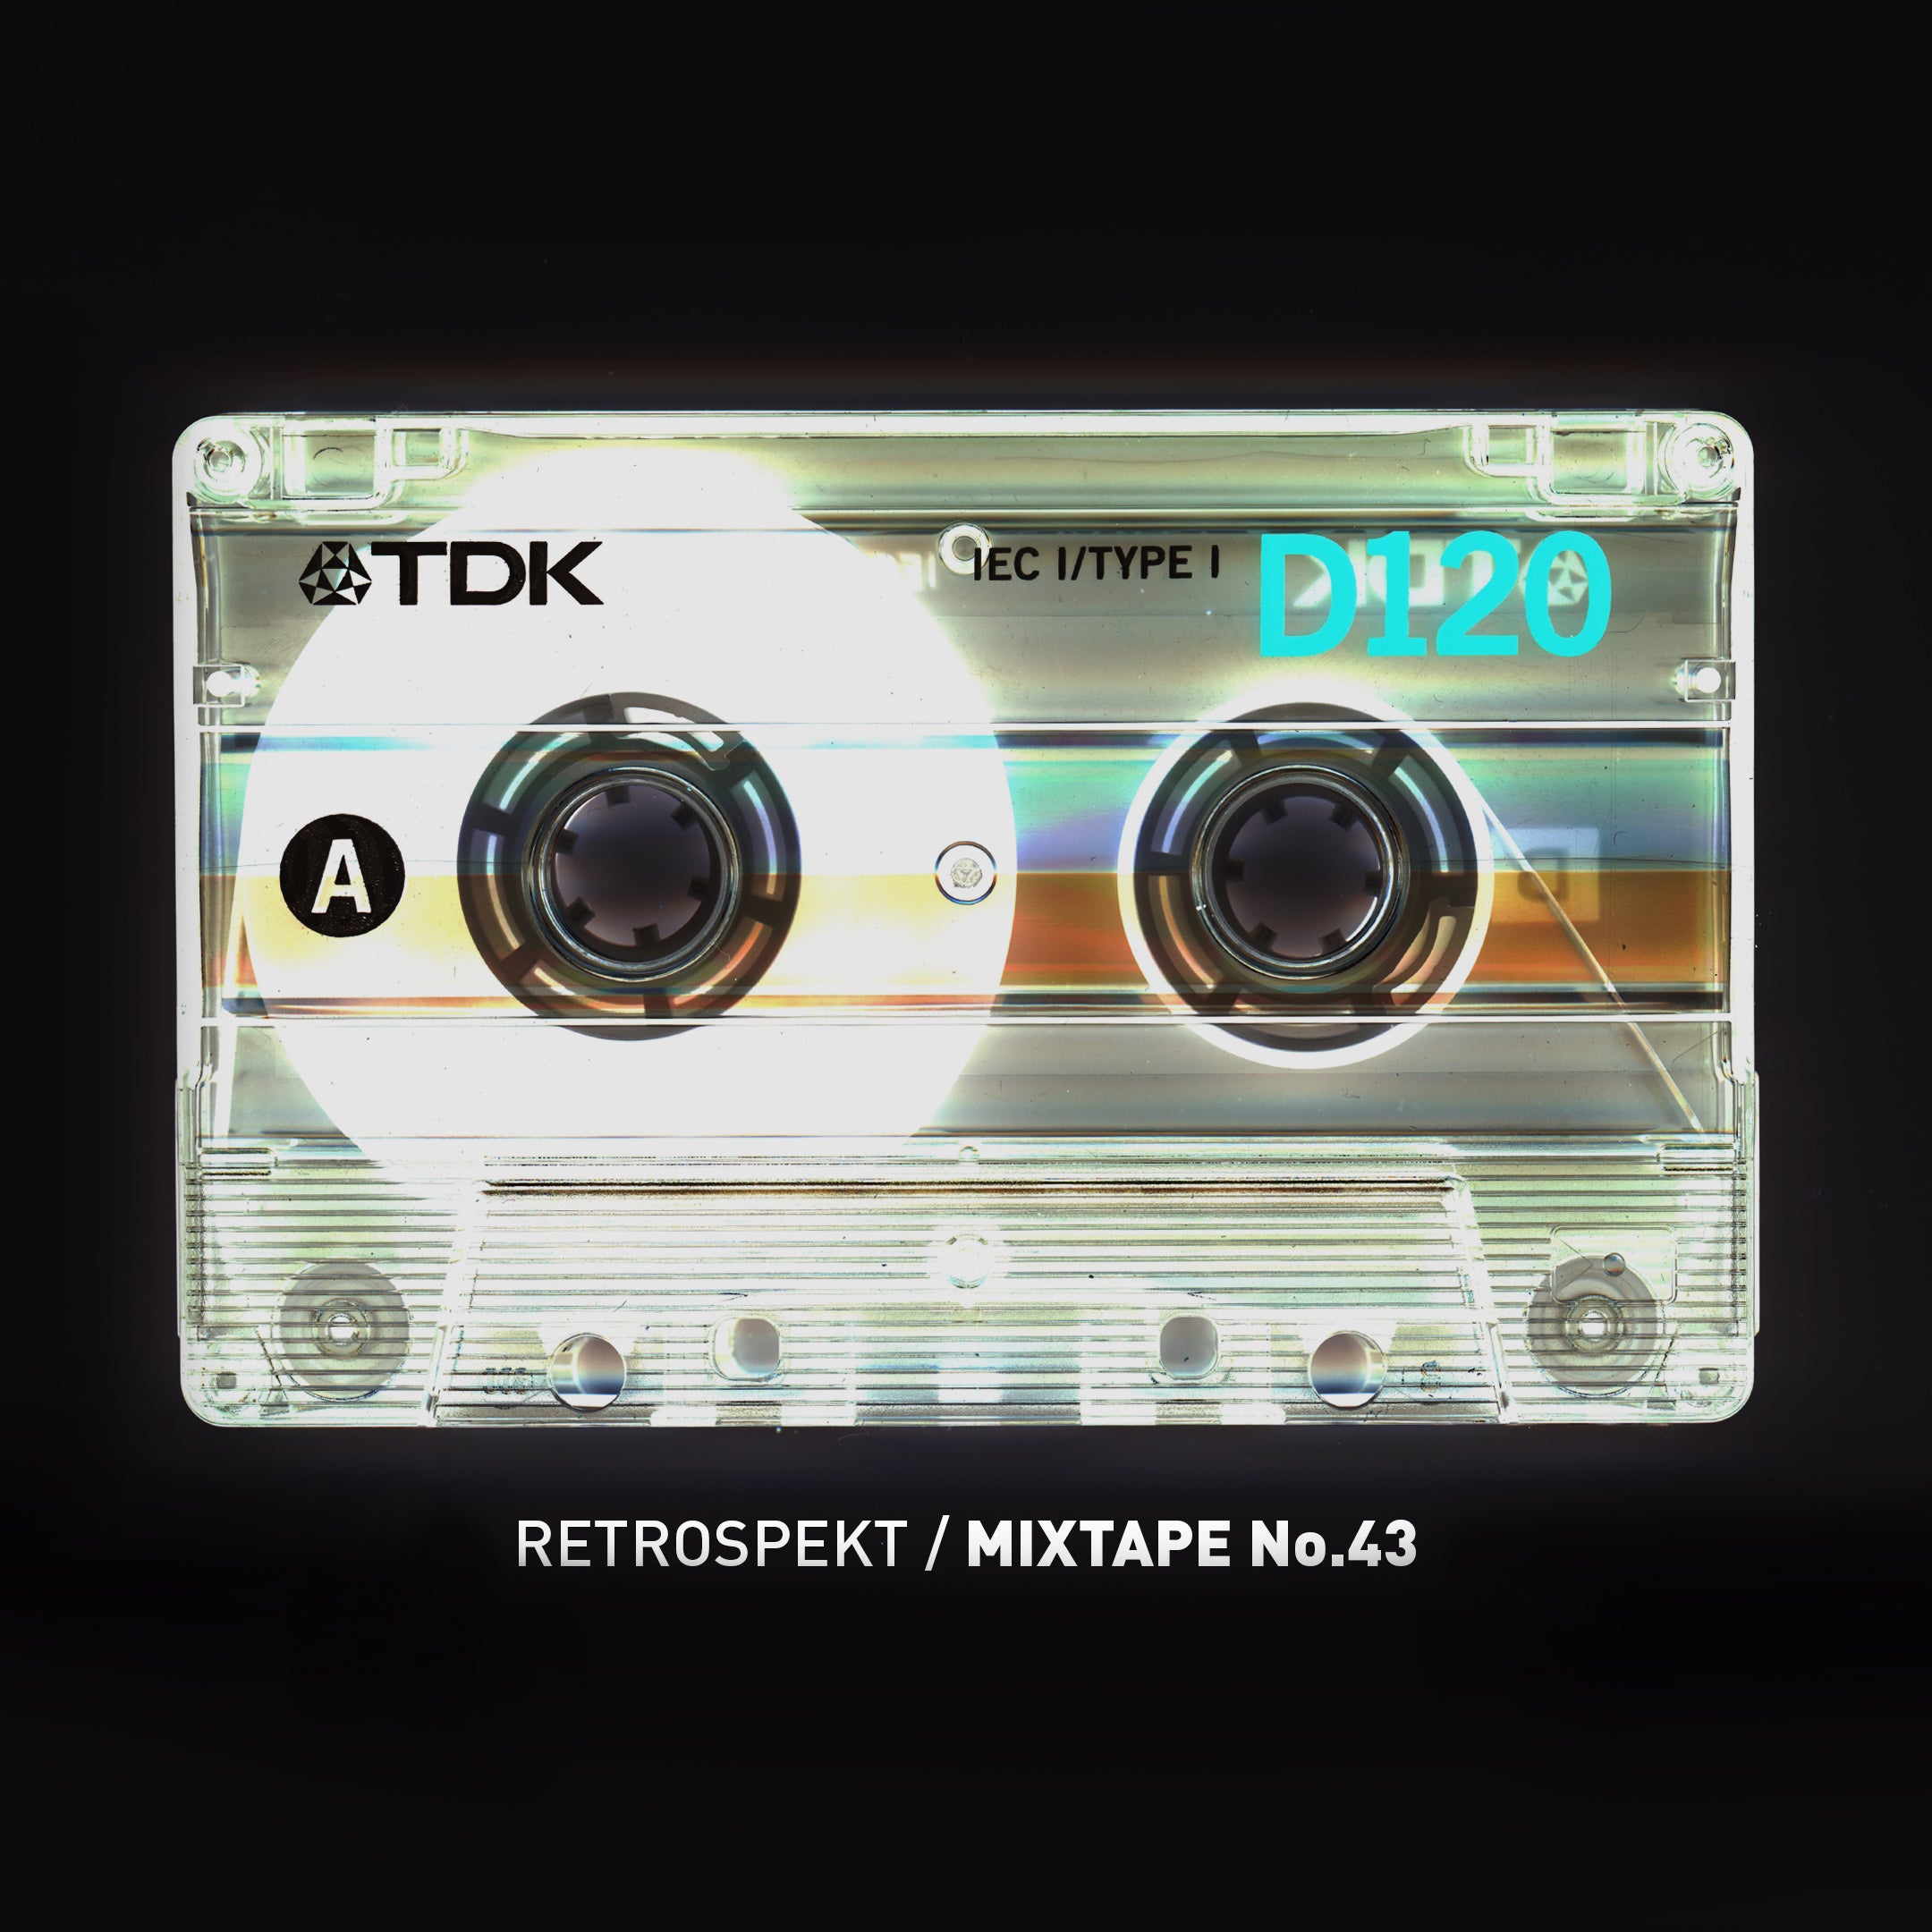 Retrospekt Mixtape No. 43